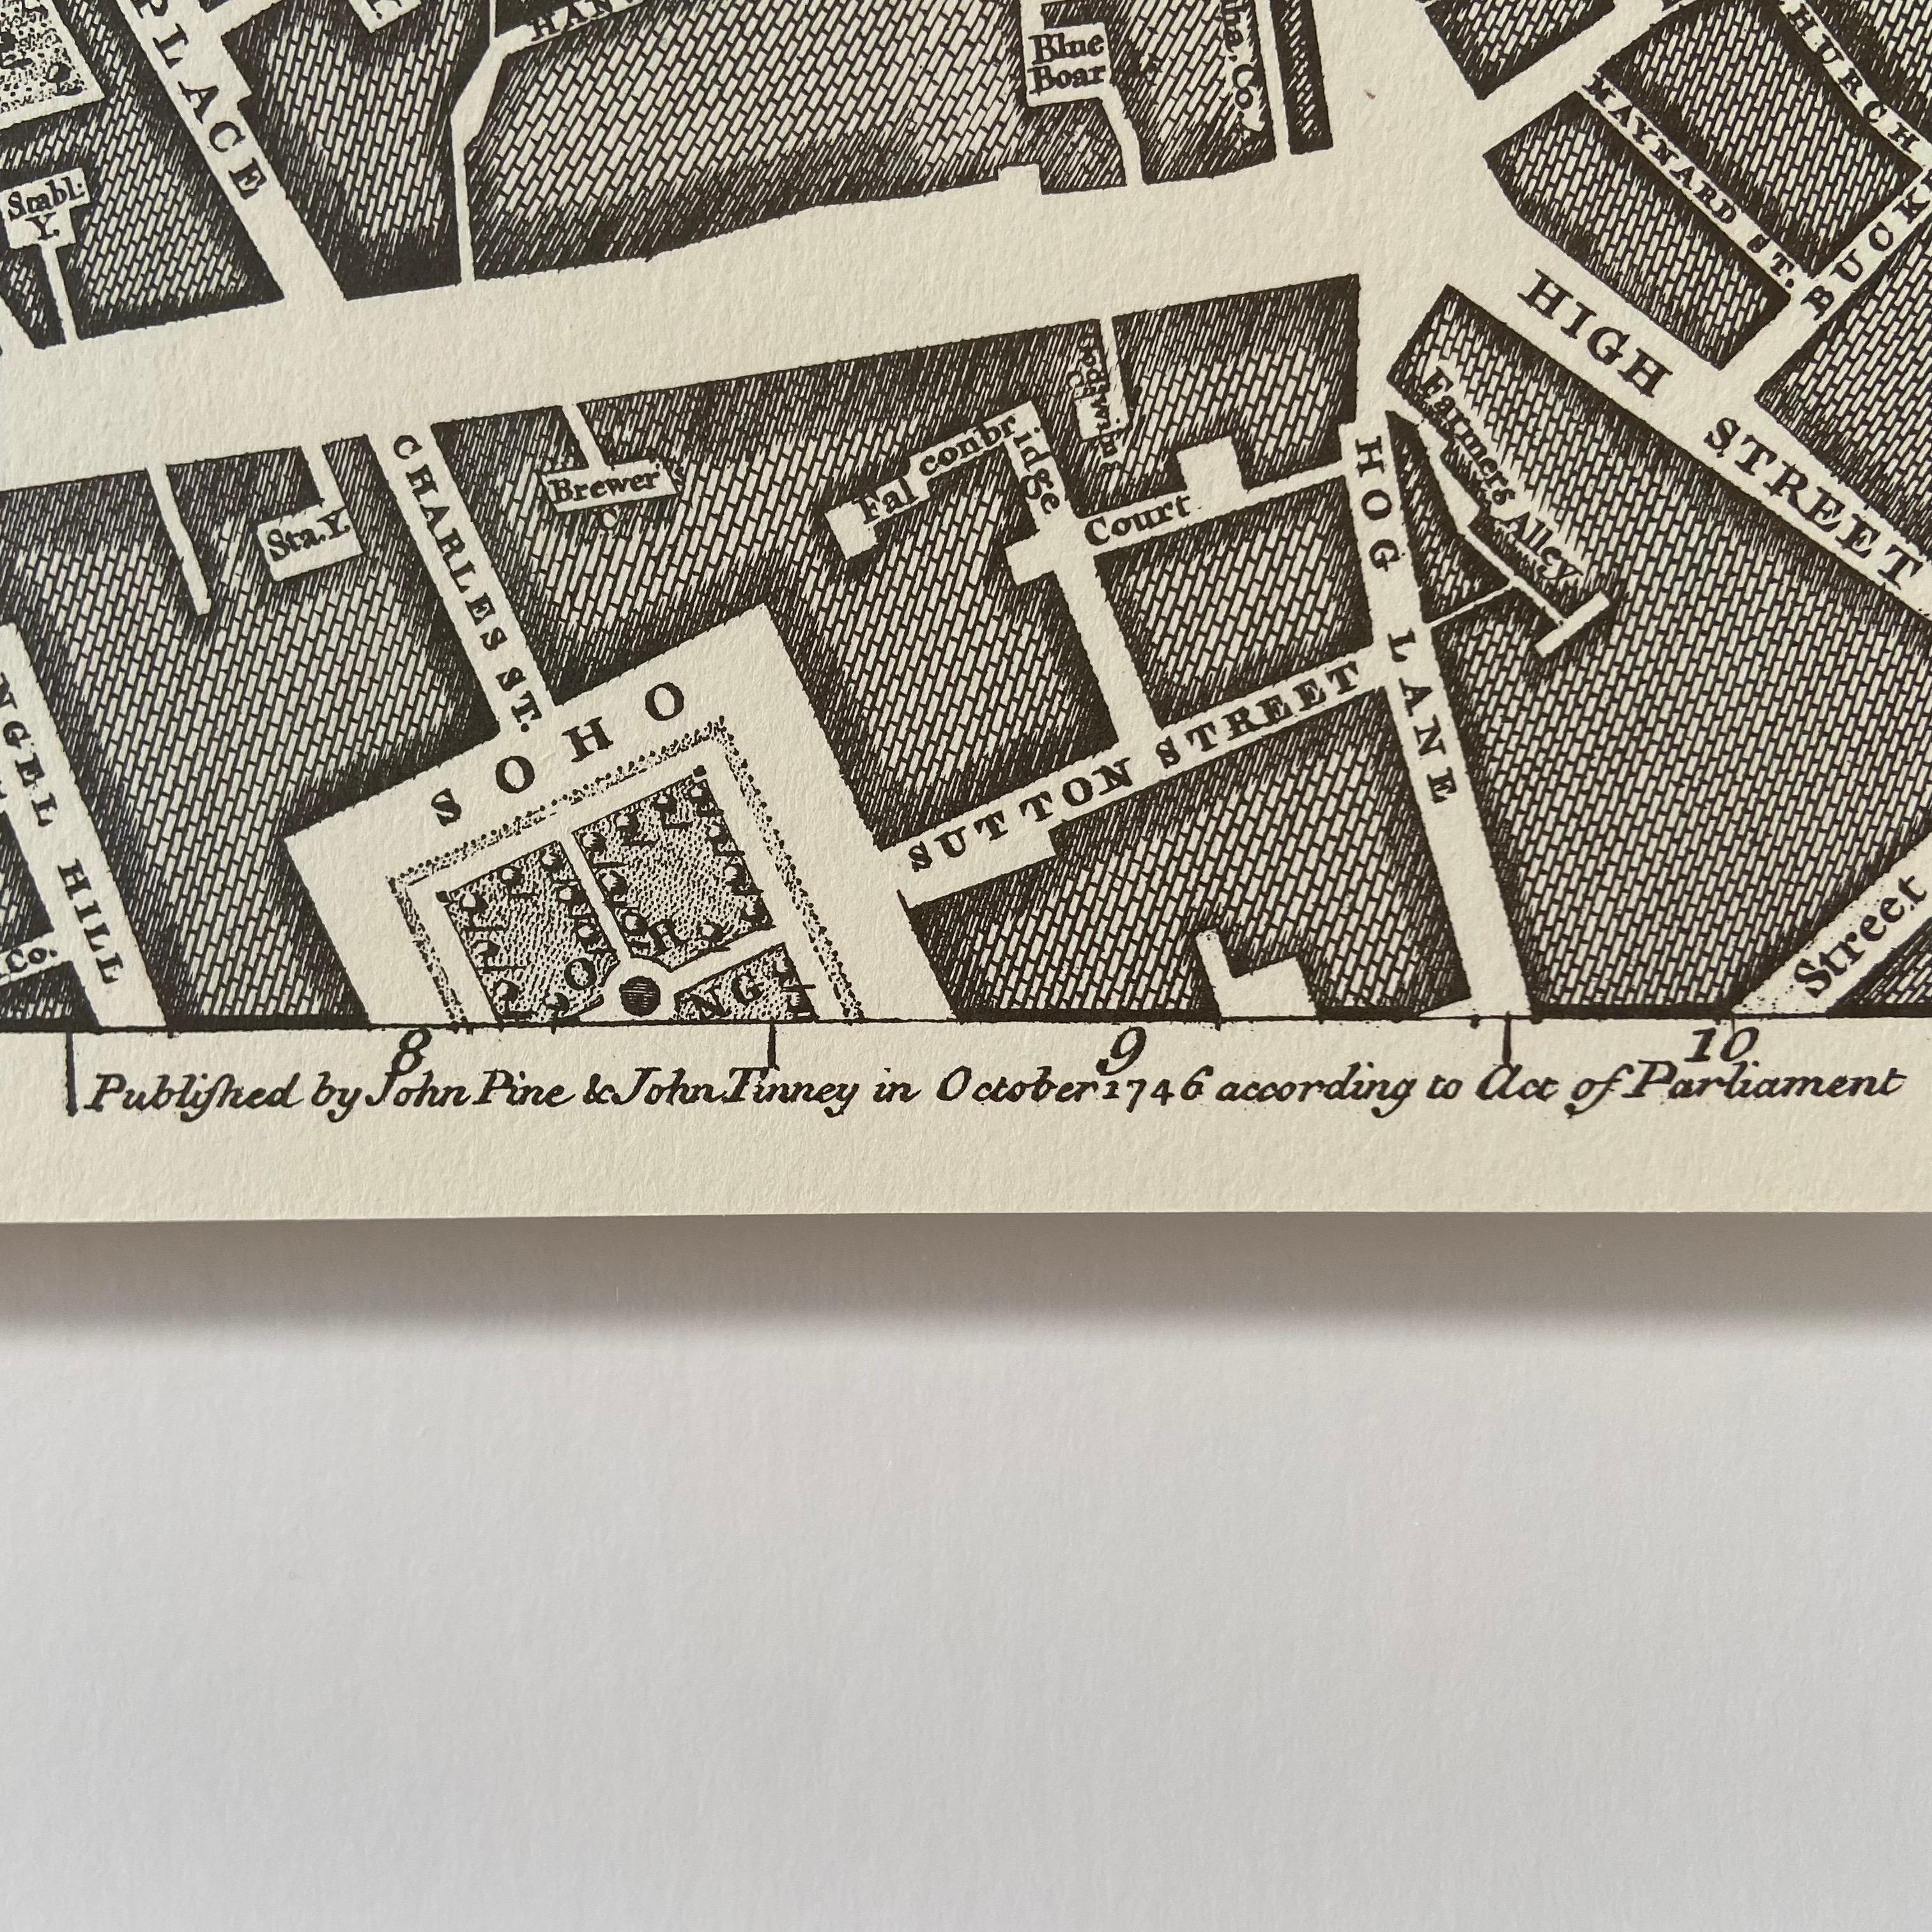 Historical Urban Plan of London Cities Framed Artwork 1